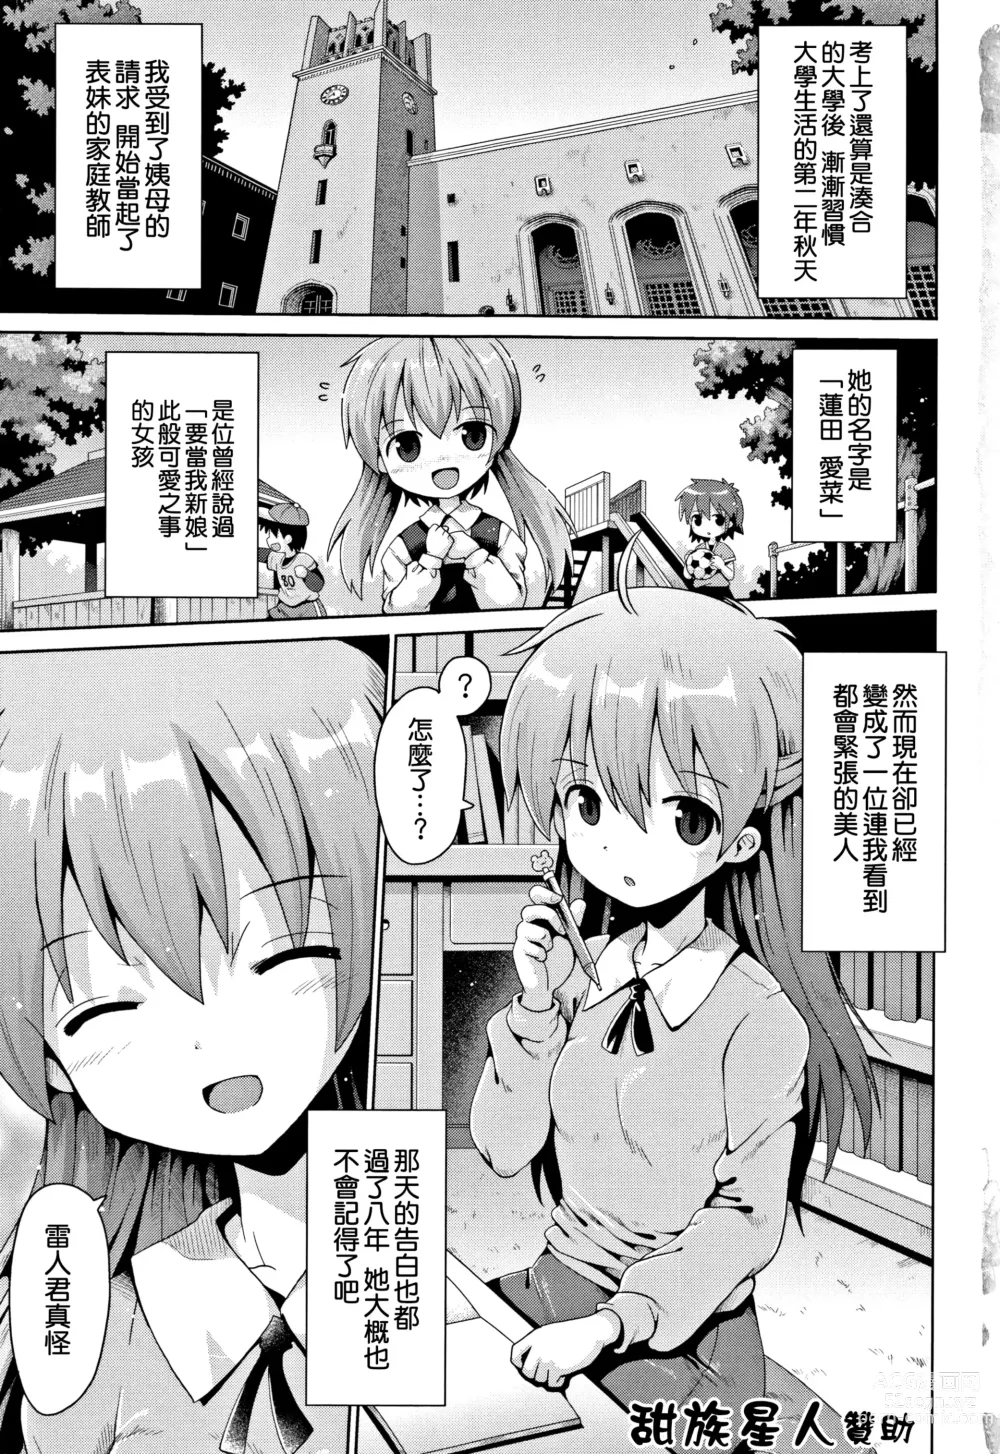 Page 1 of manga Trident 1 + 2 + 3